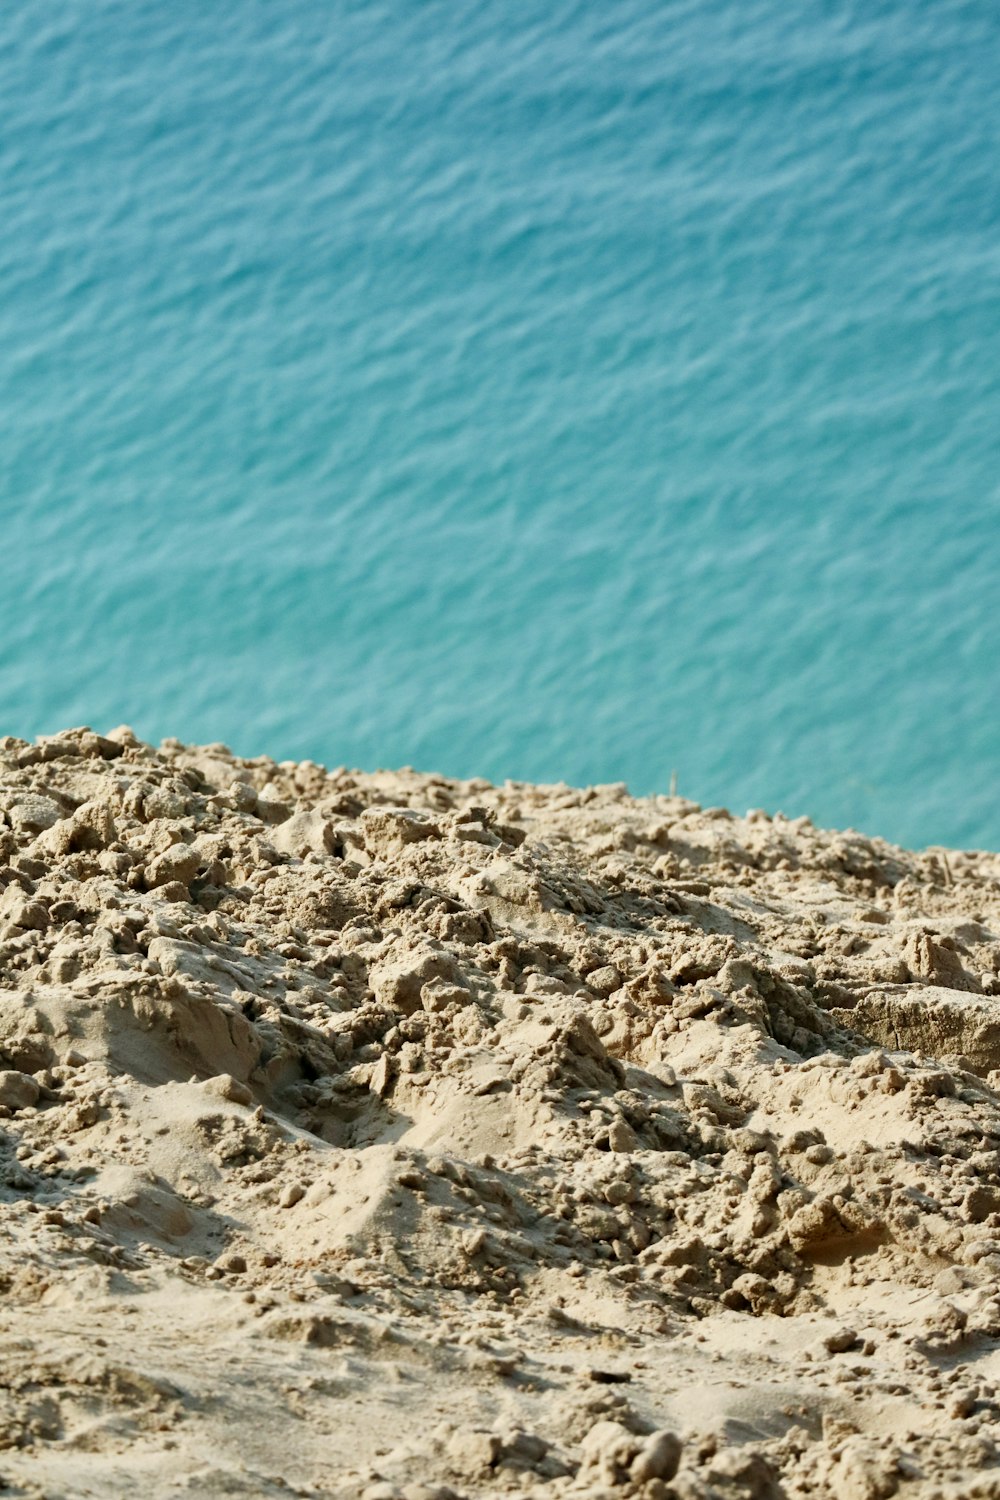 a bird sitting on a sandy beach next to the ocean